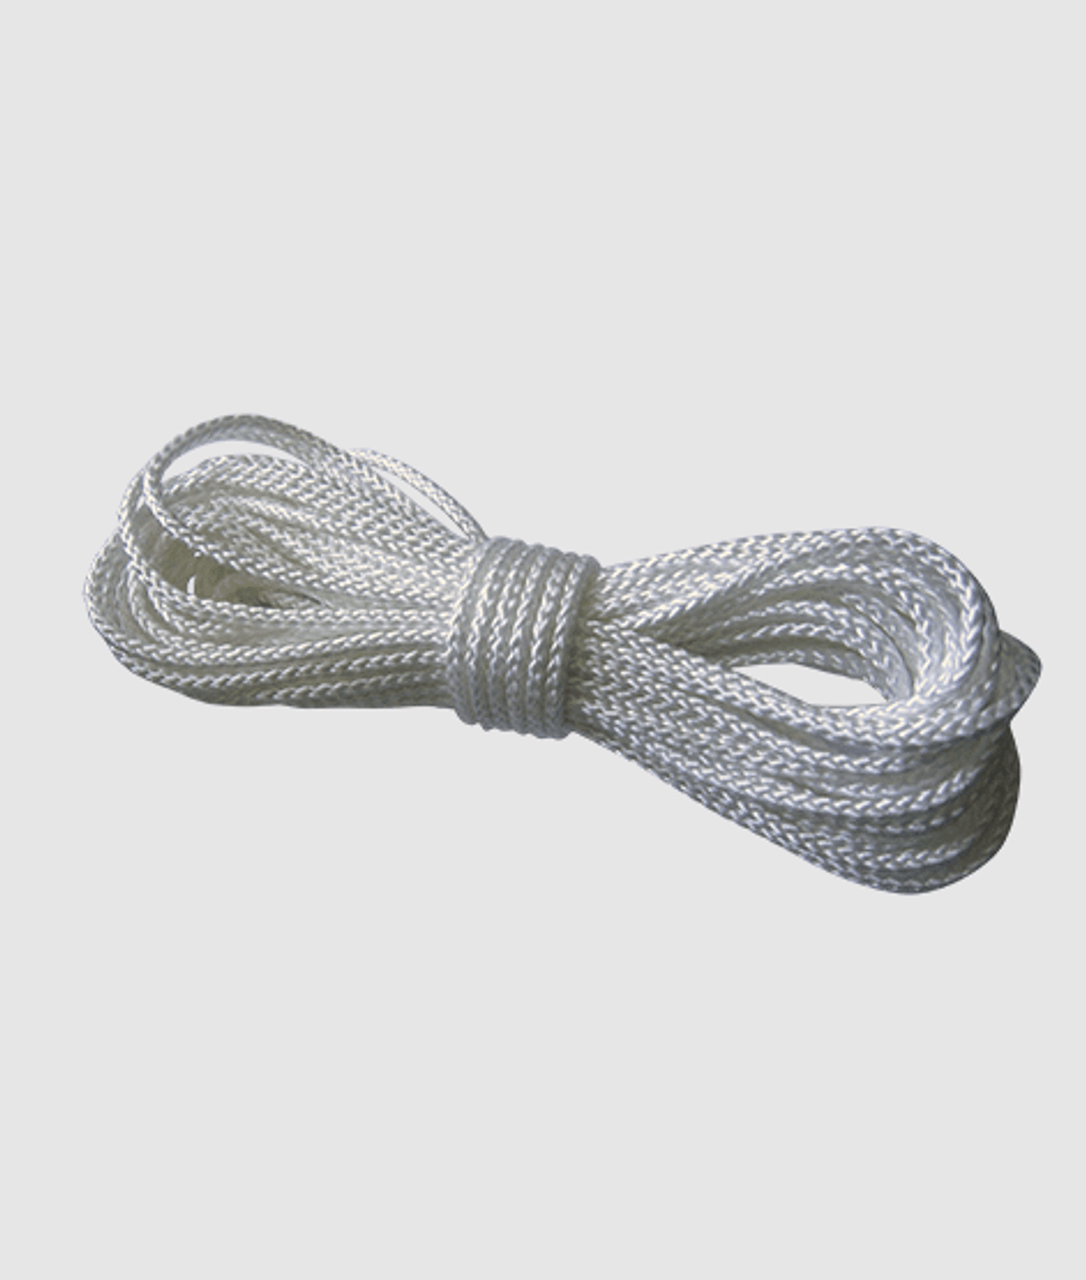 50 Feet of Strong Nylon Rope –